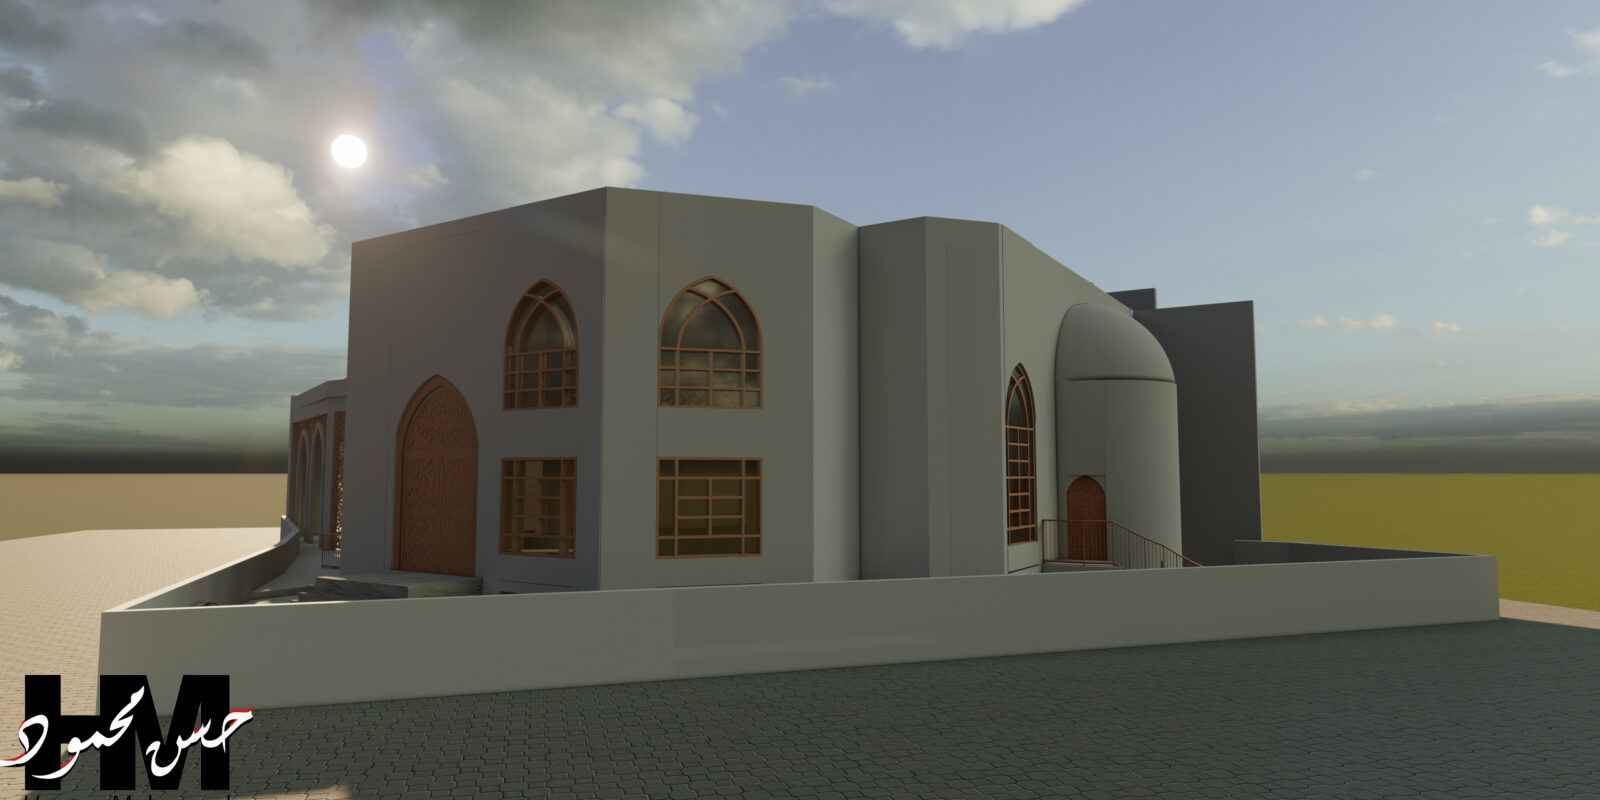 Omdurman mosque